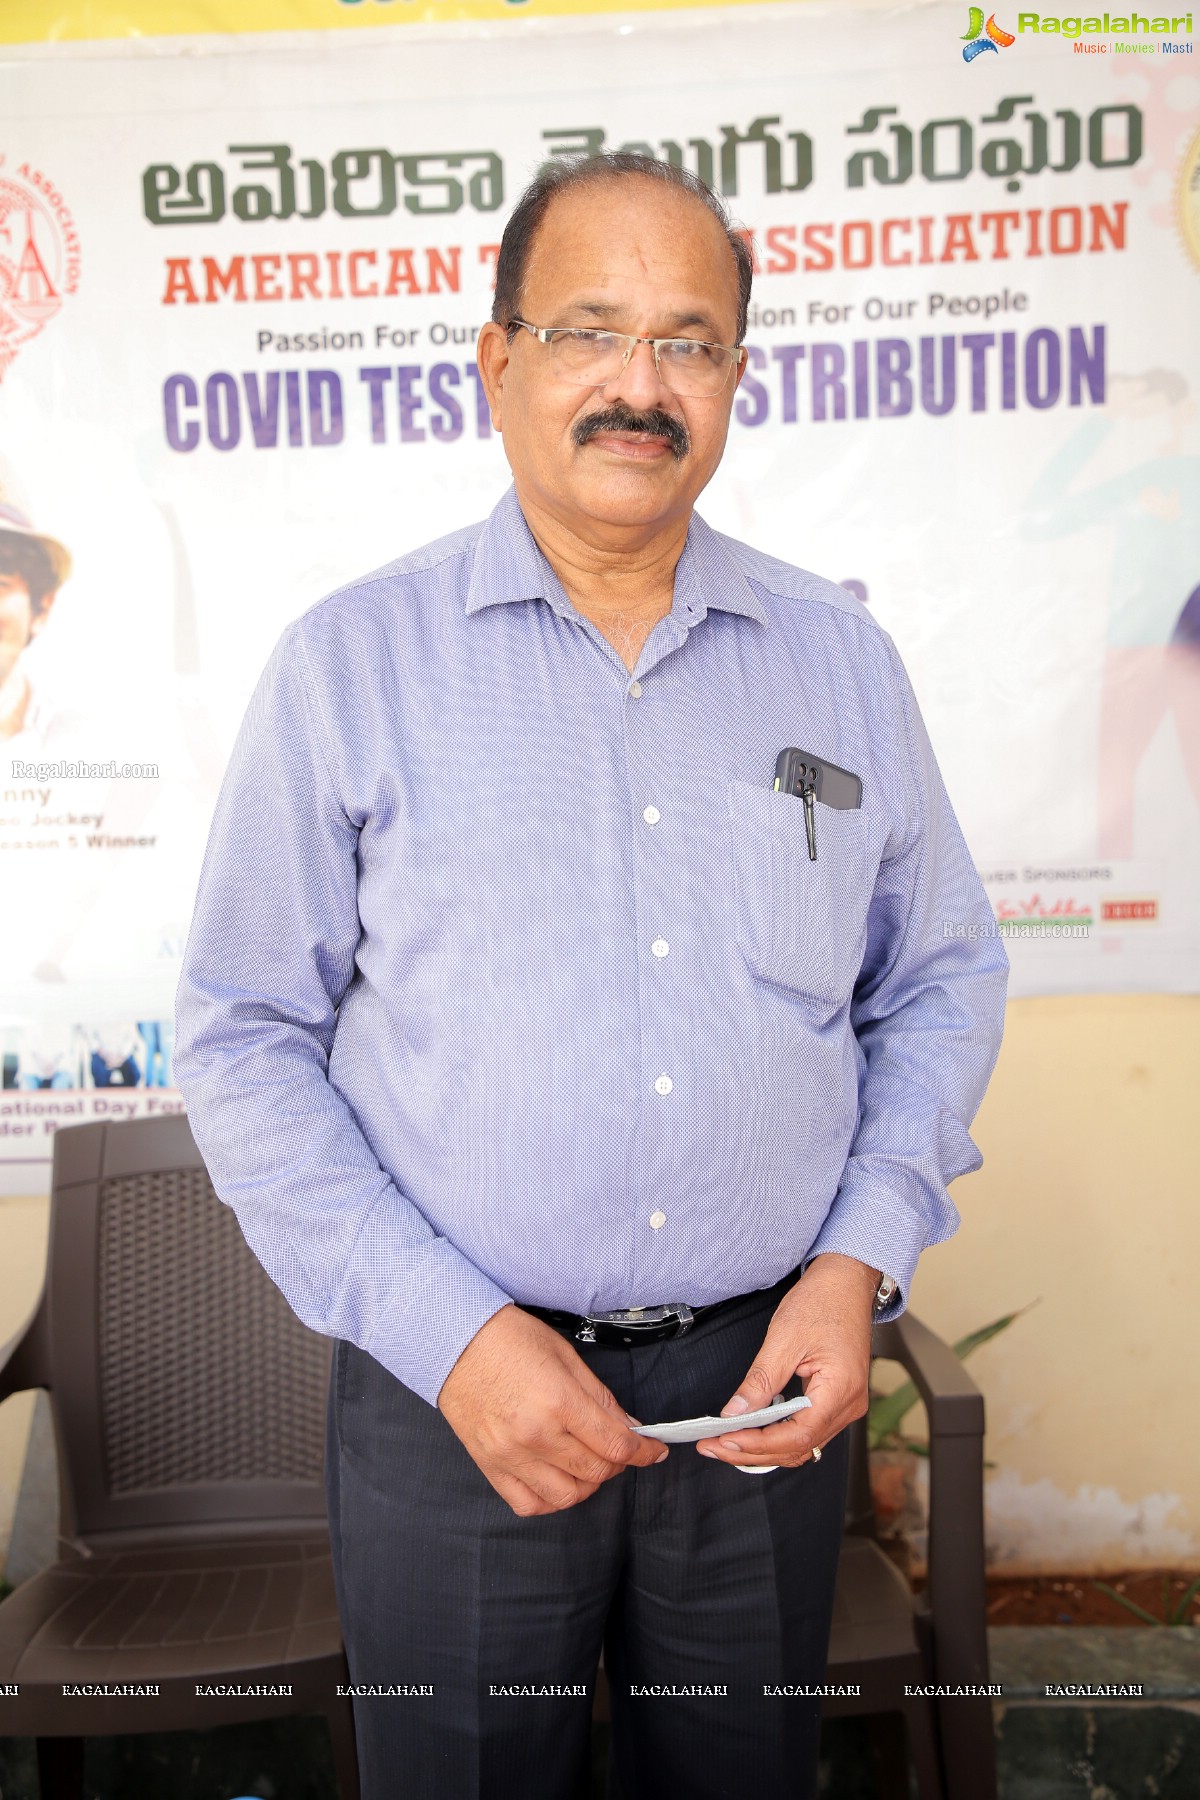 American Telugu Association Covid Test Kits Distribution To Old Age Homes